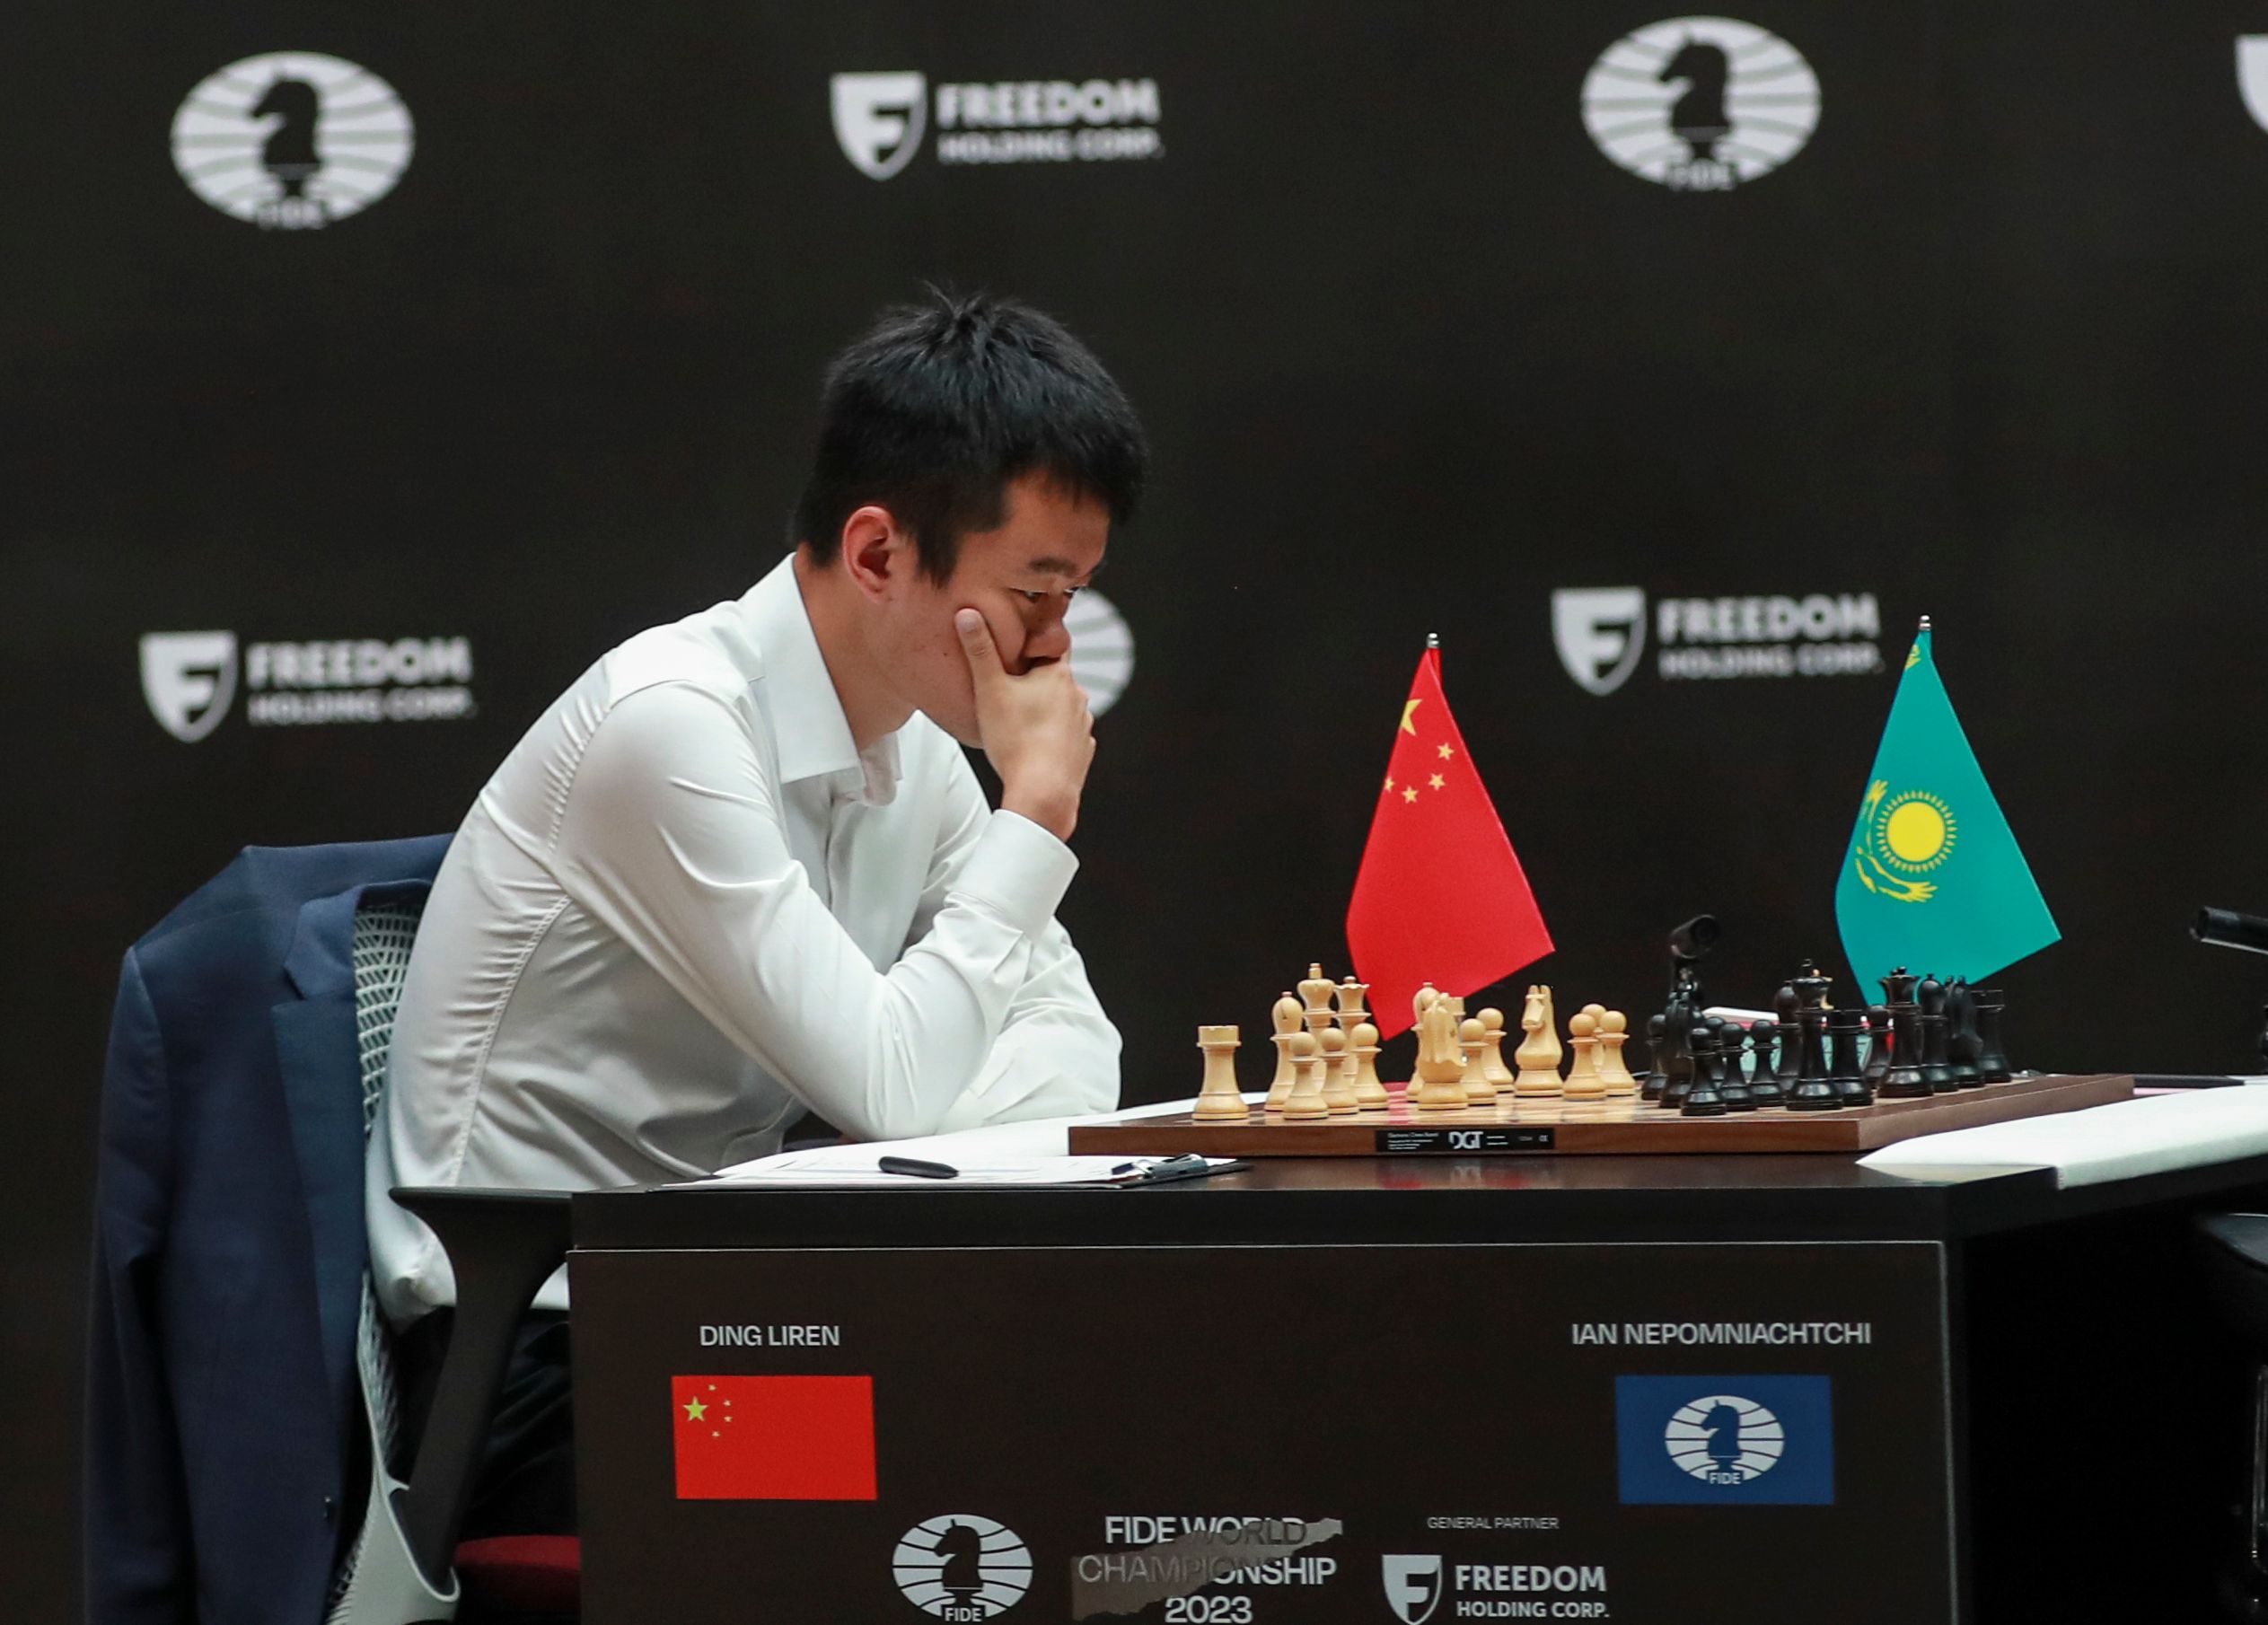 2023 FIDE World Chess Championship (Ian Nepomniachtchi vs Ding Liren) 